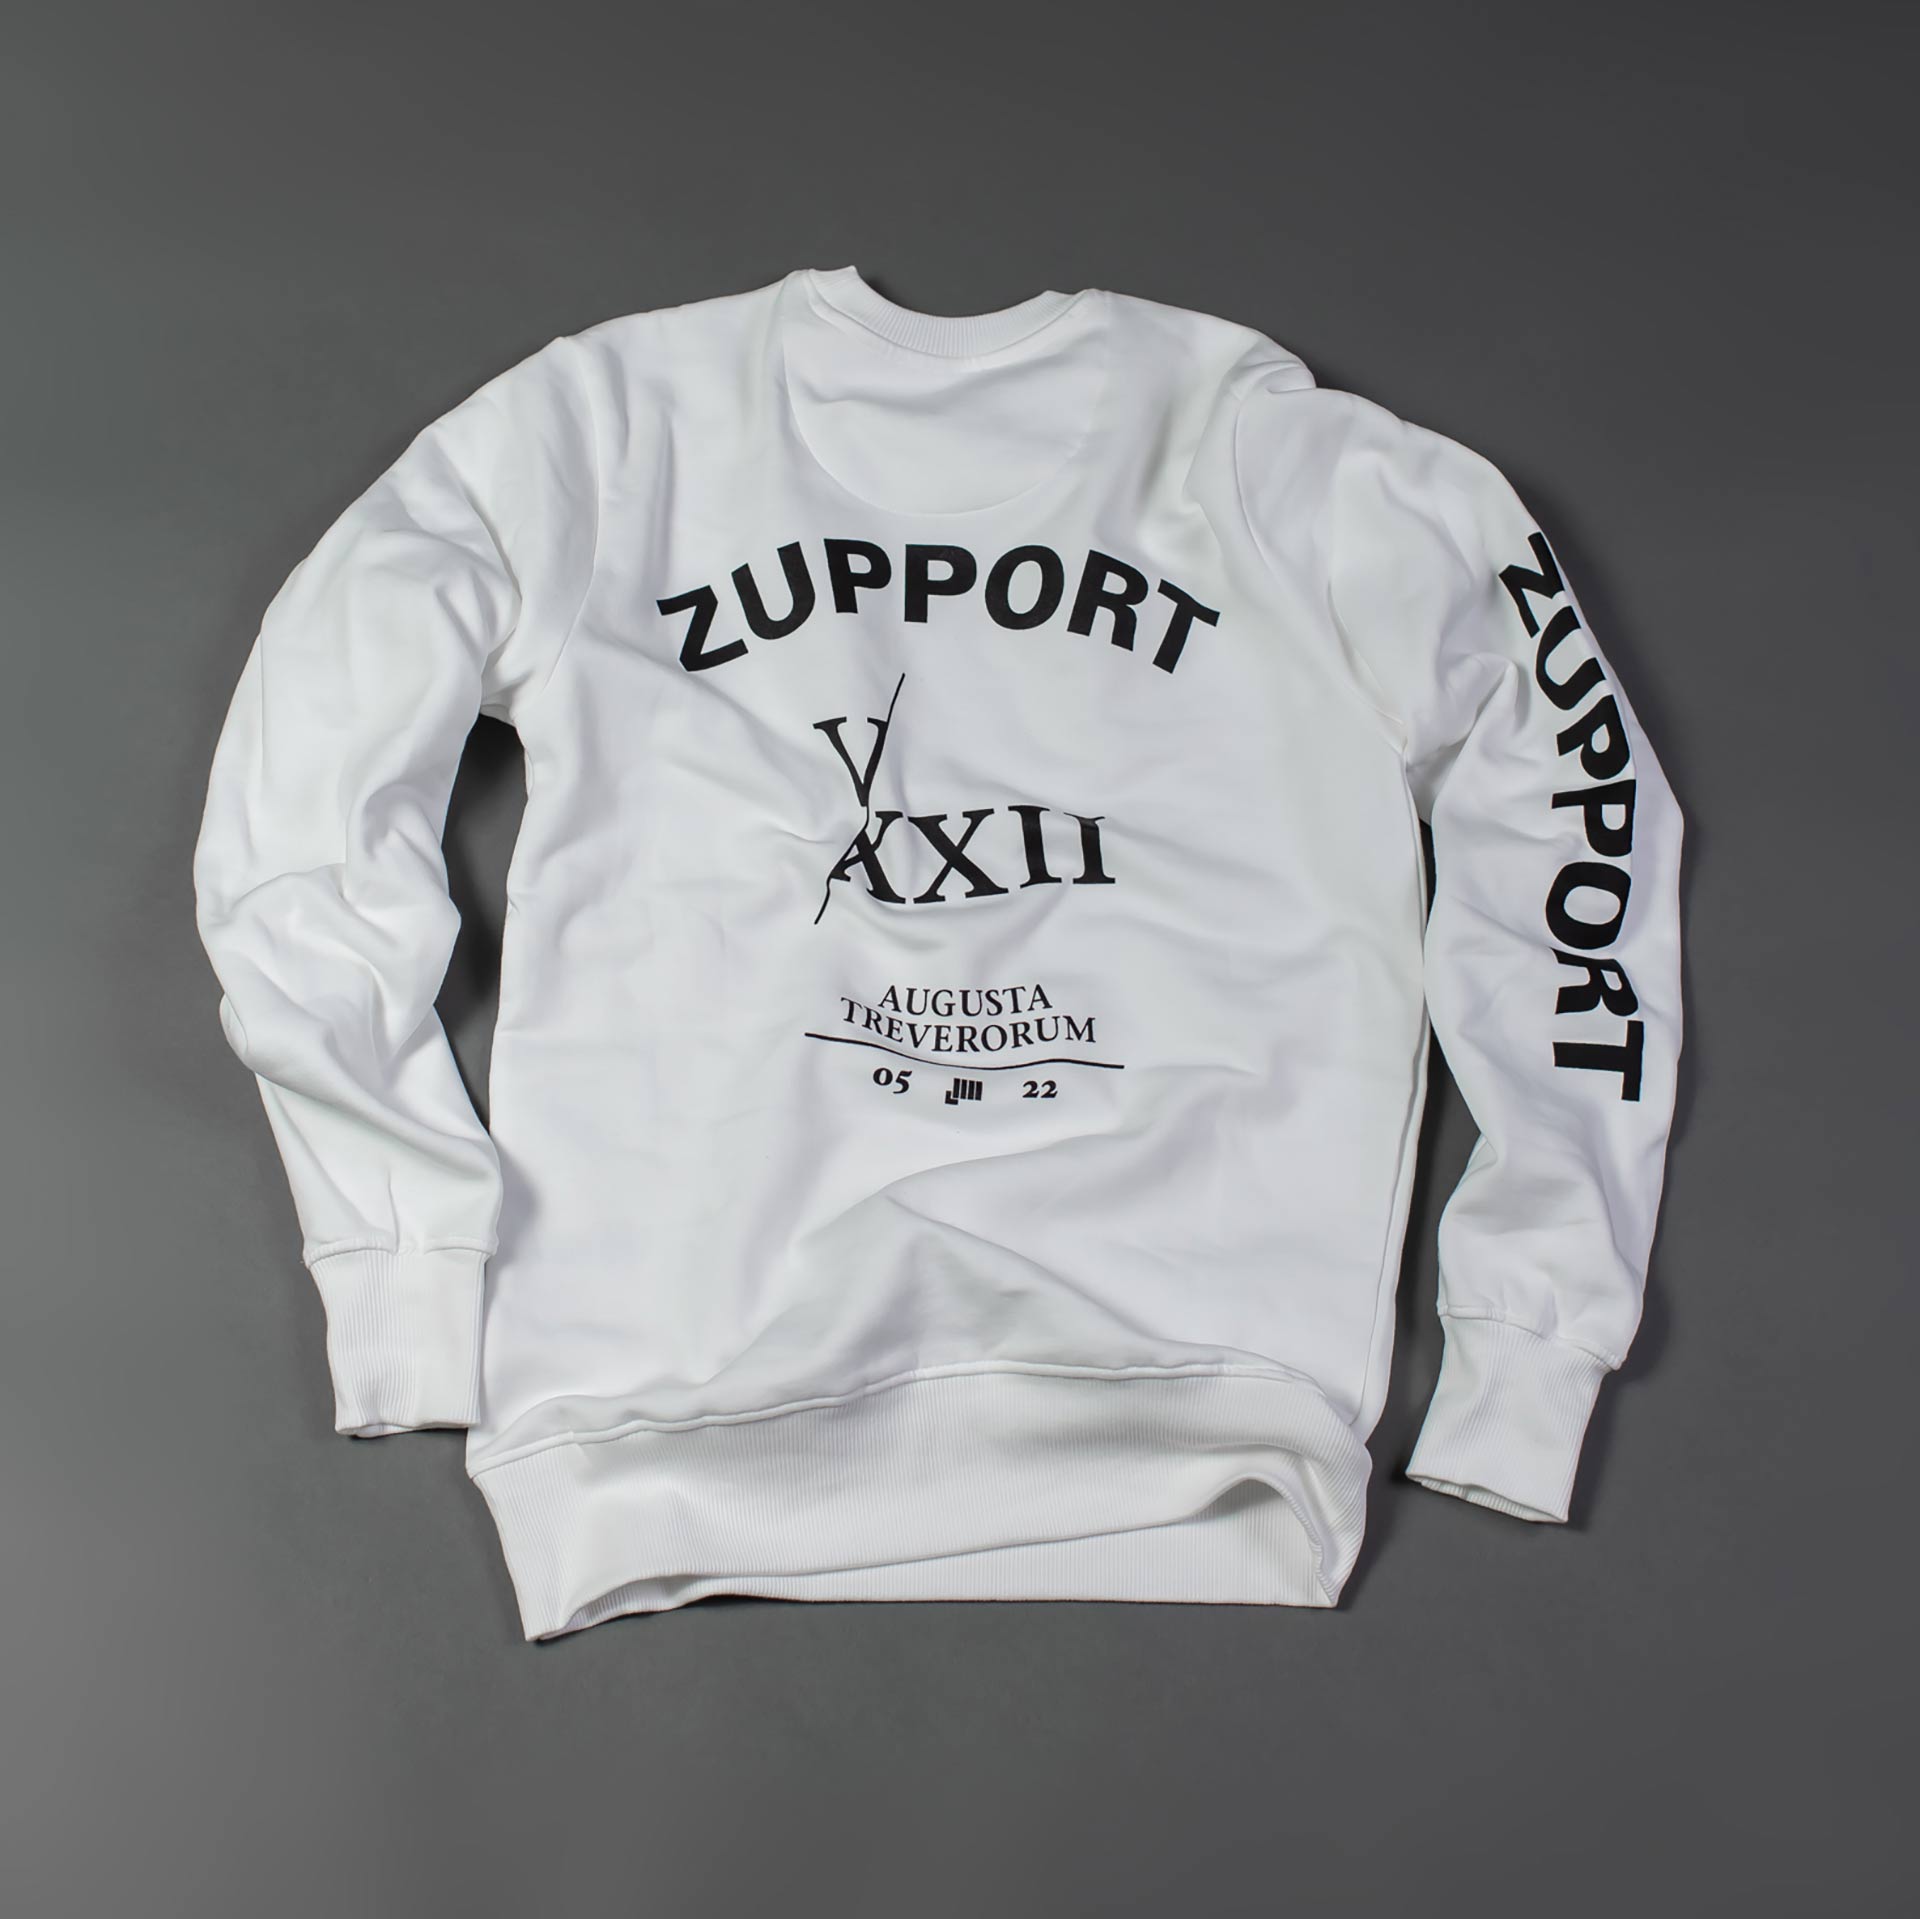 ZUPPORT XXII Sweater white